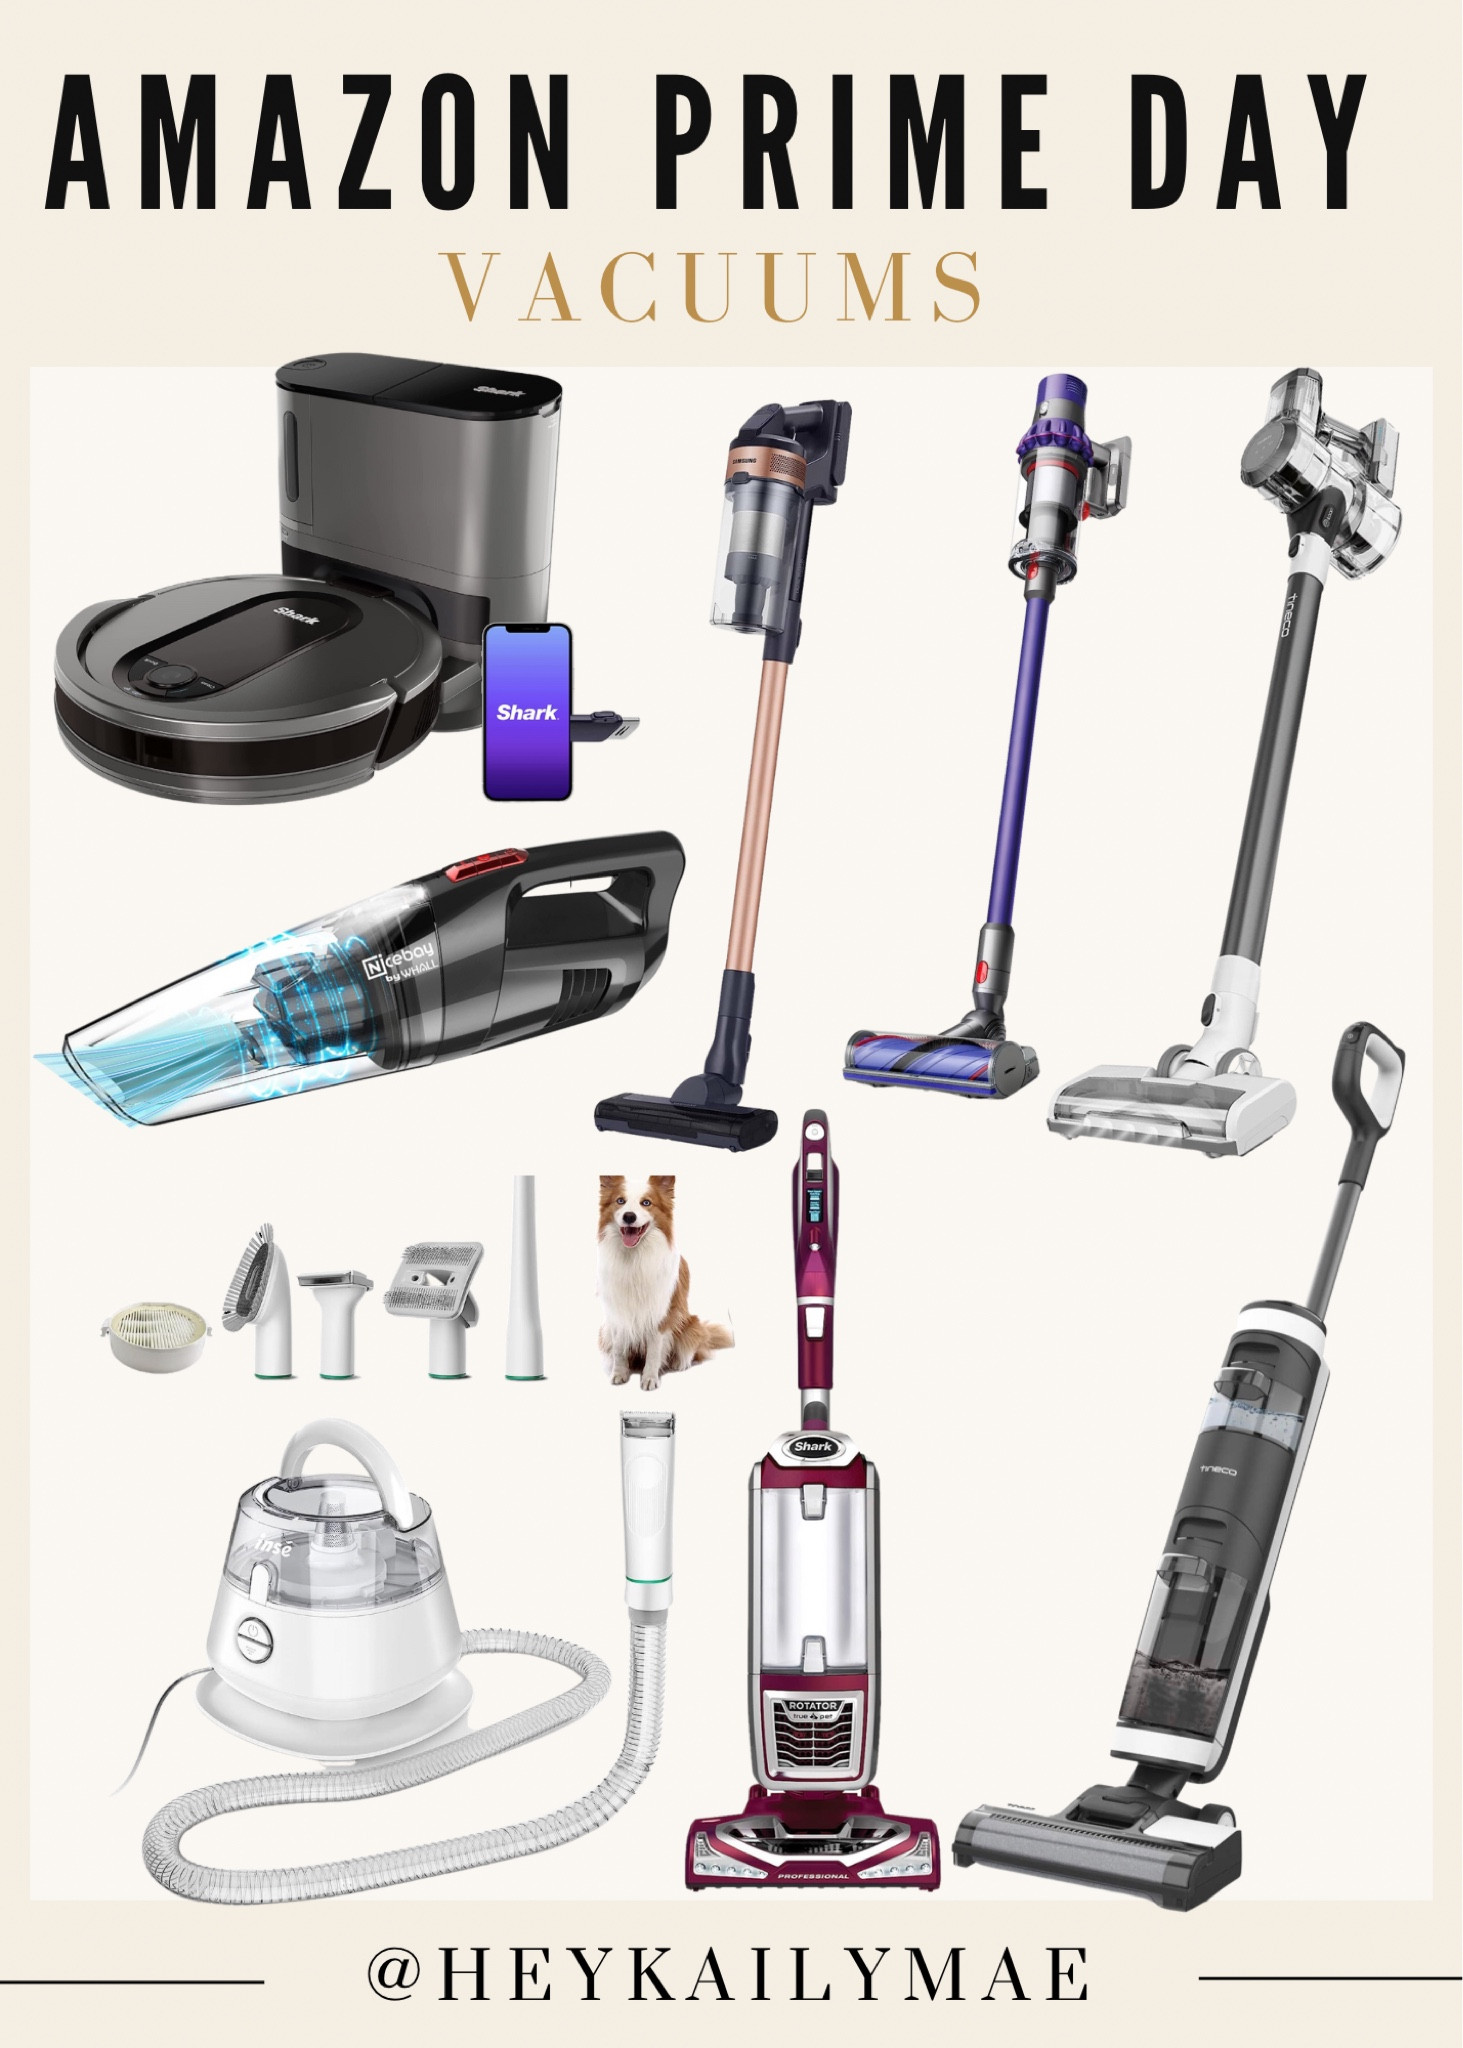 Whall Handheld Vacuum Cordless, Dry Wet Hand Vacuum Cleaner 8500 Pa Suction